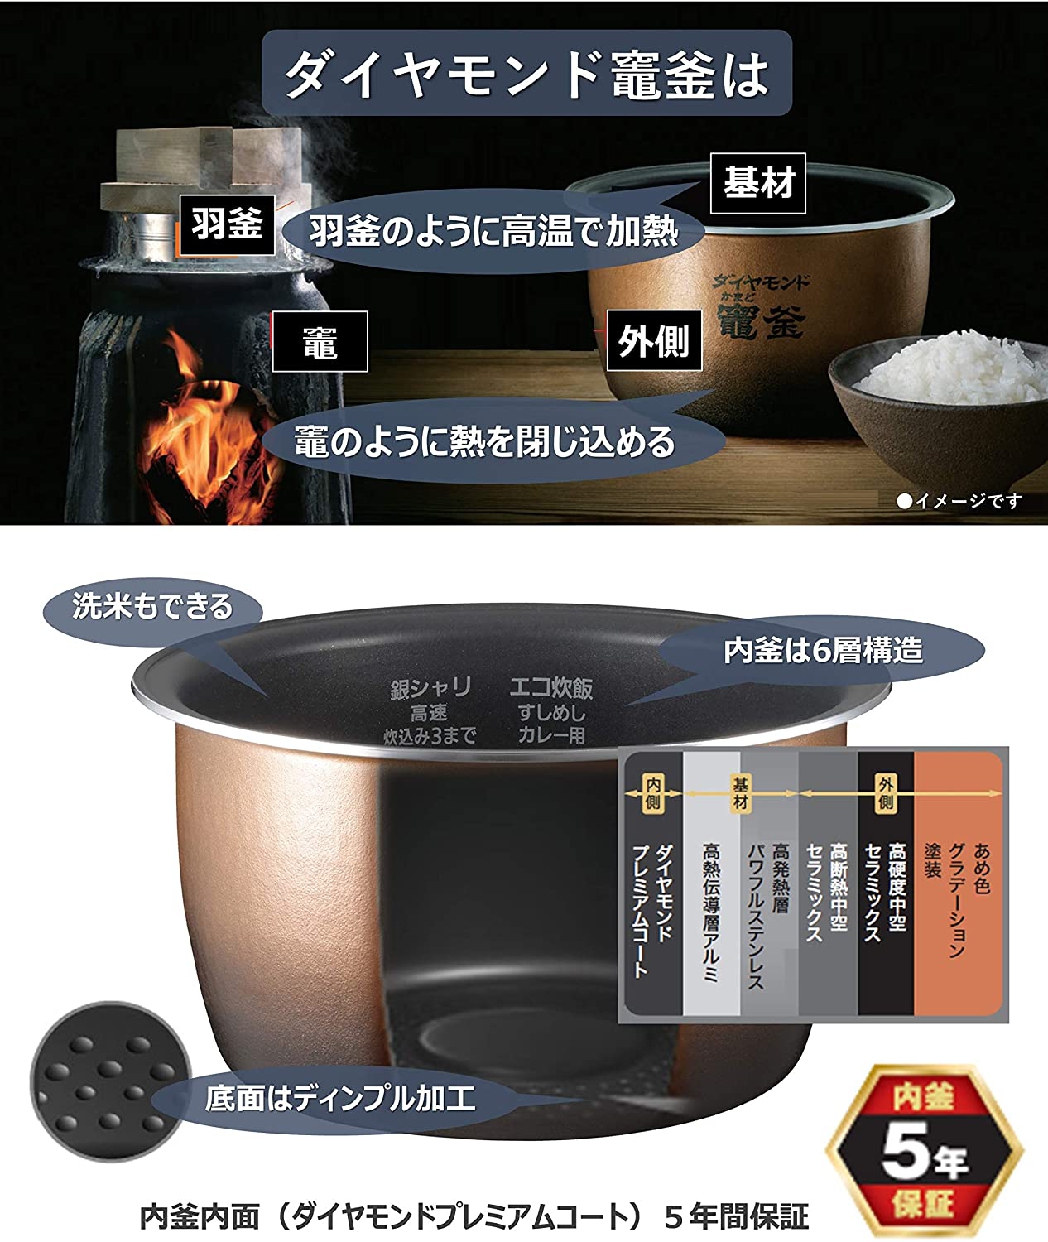 Panasonic(パナソニック) スチーム&可変圧力ＩＨジャー炊飯器 SR-VSX109 ブラックの商品画像3 